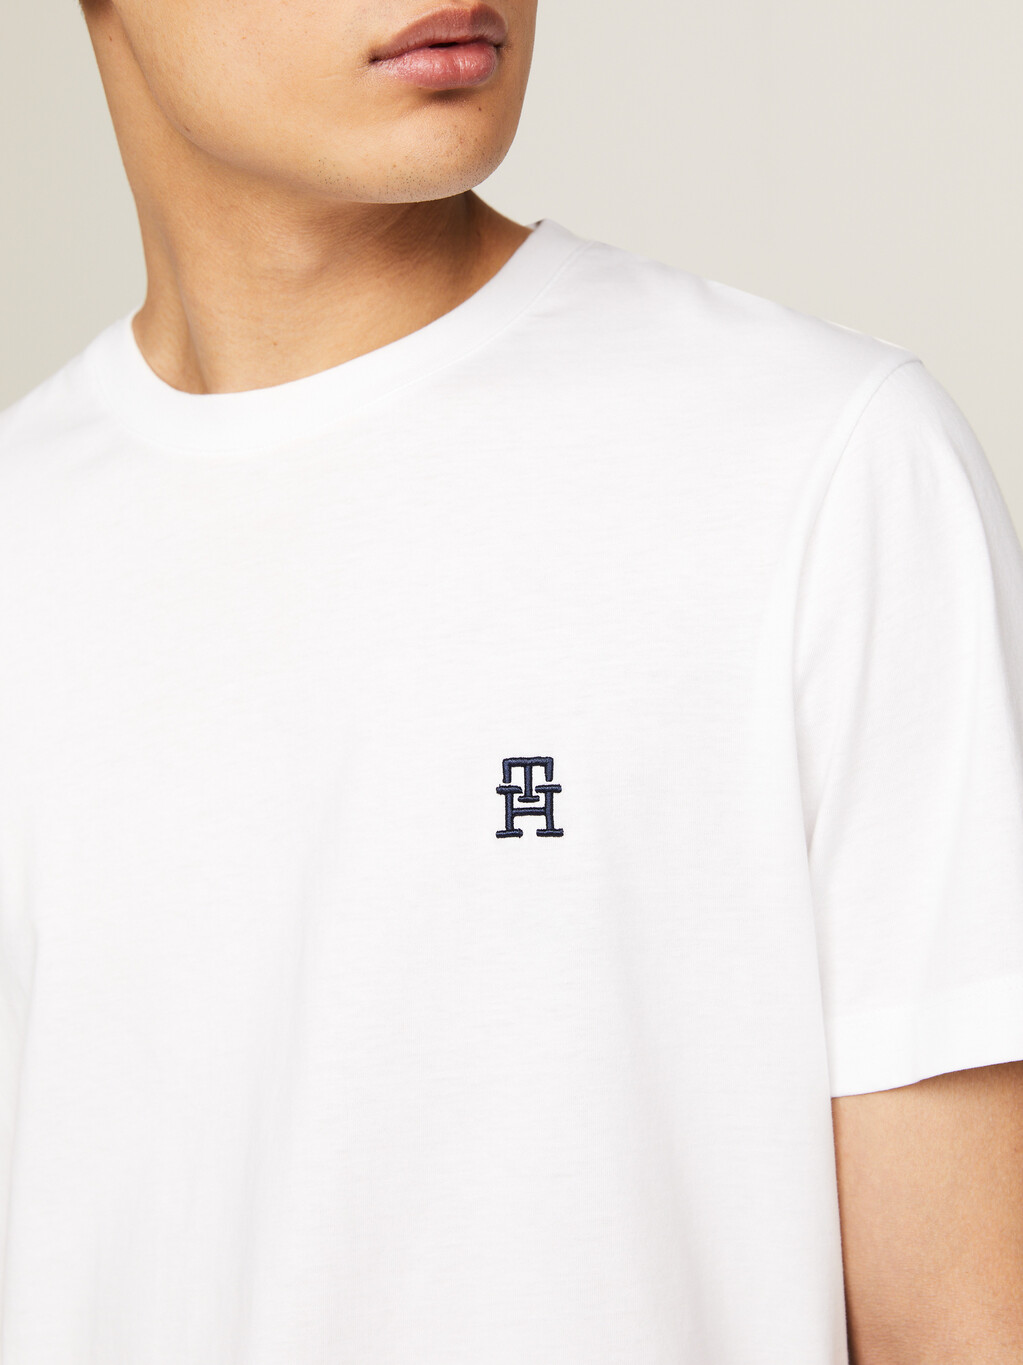 TH Monogram T-Shirt, White, hi-res